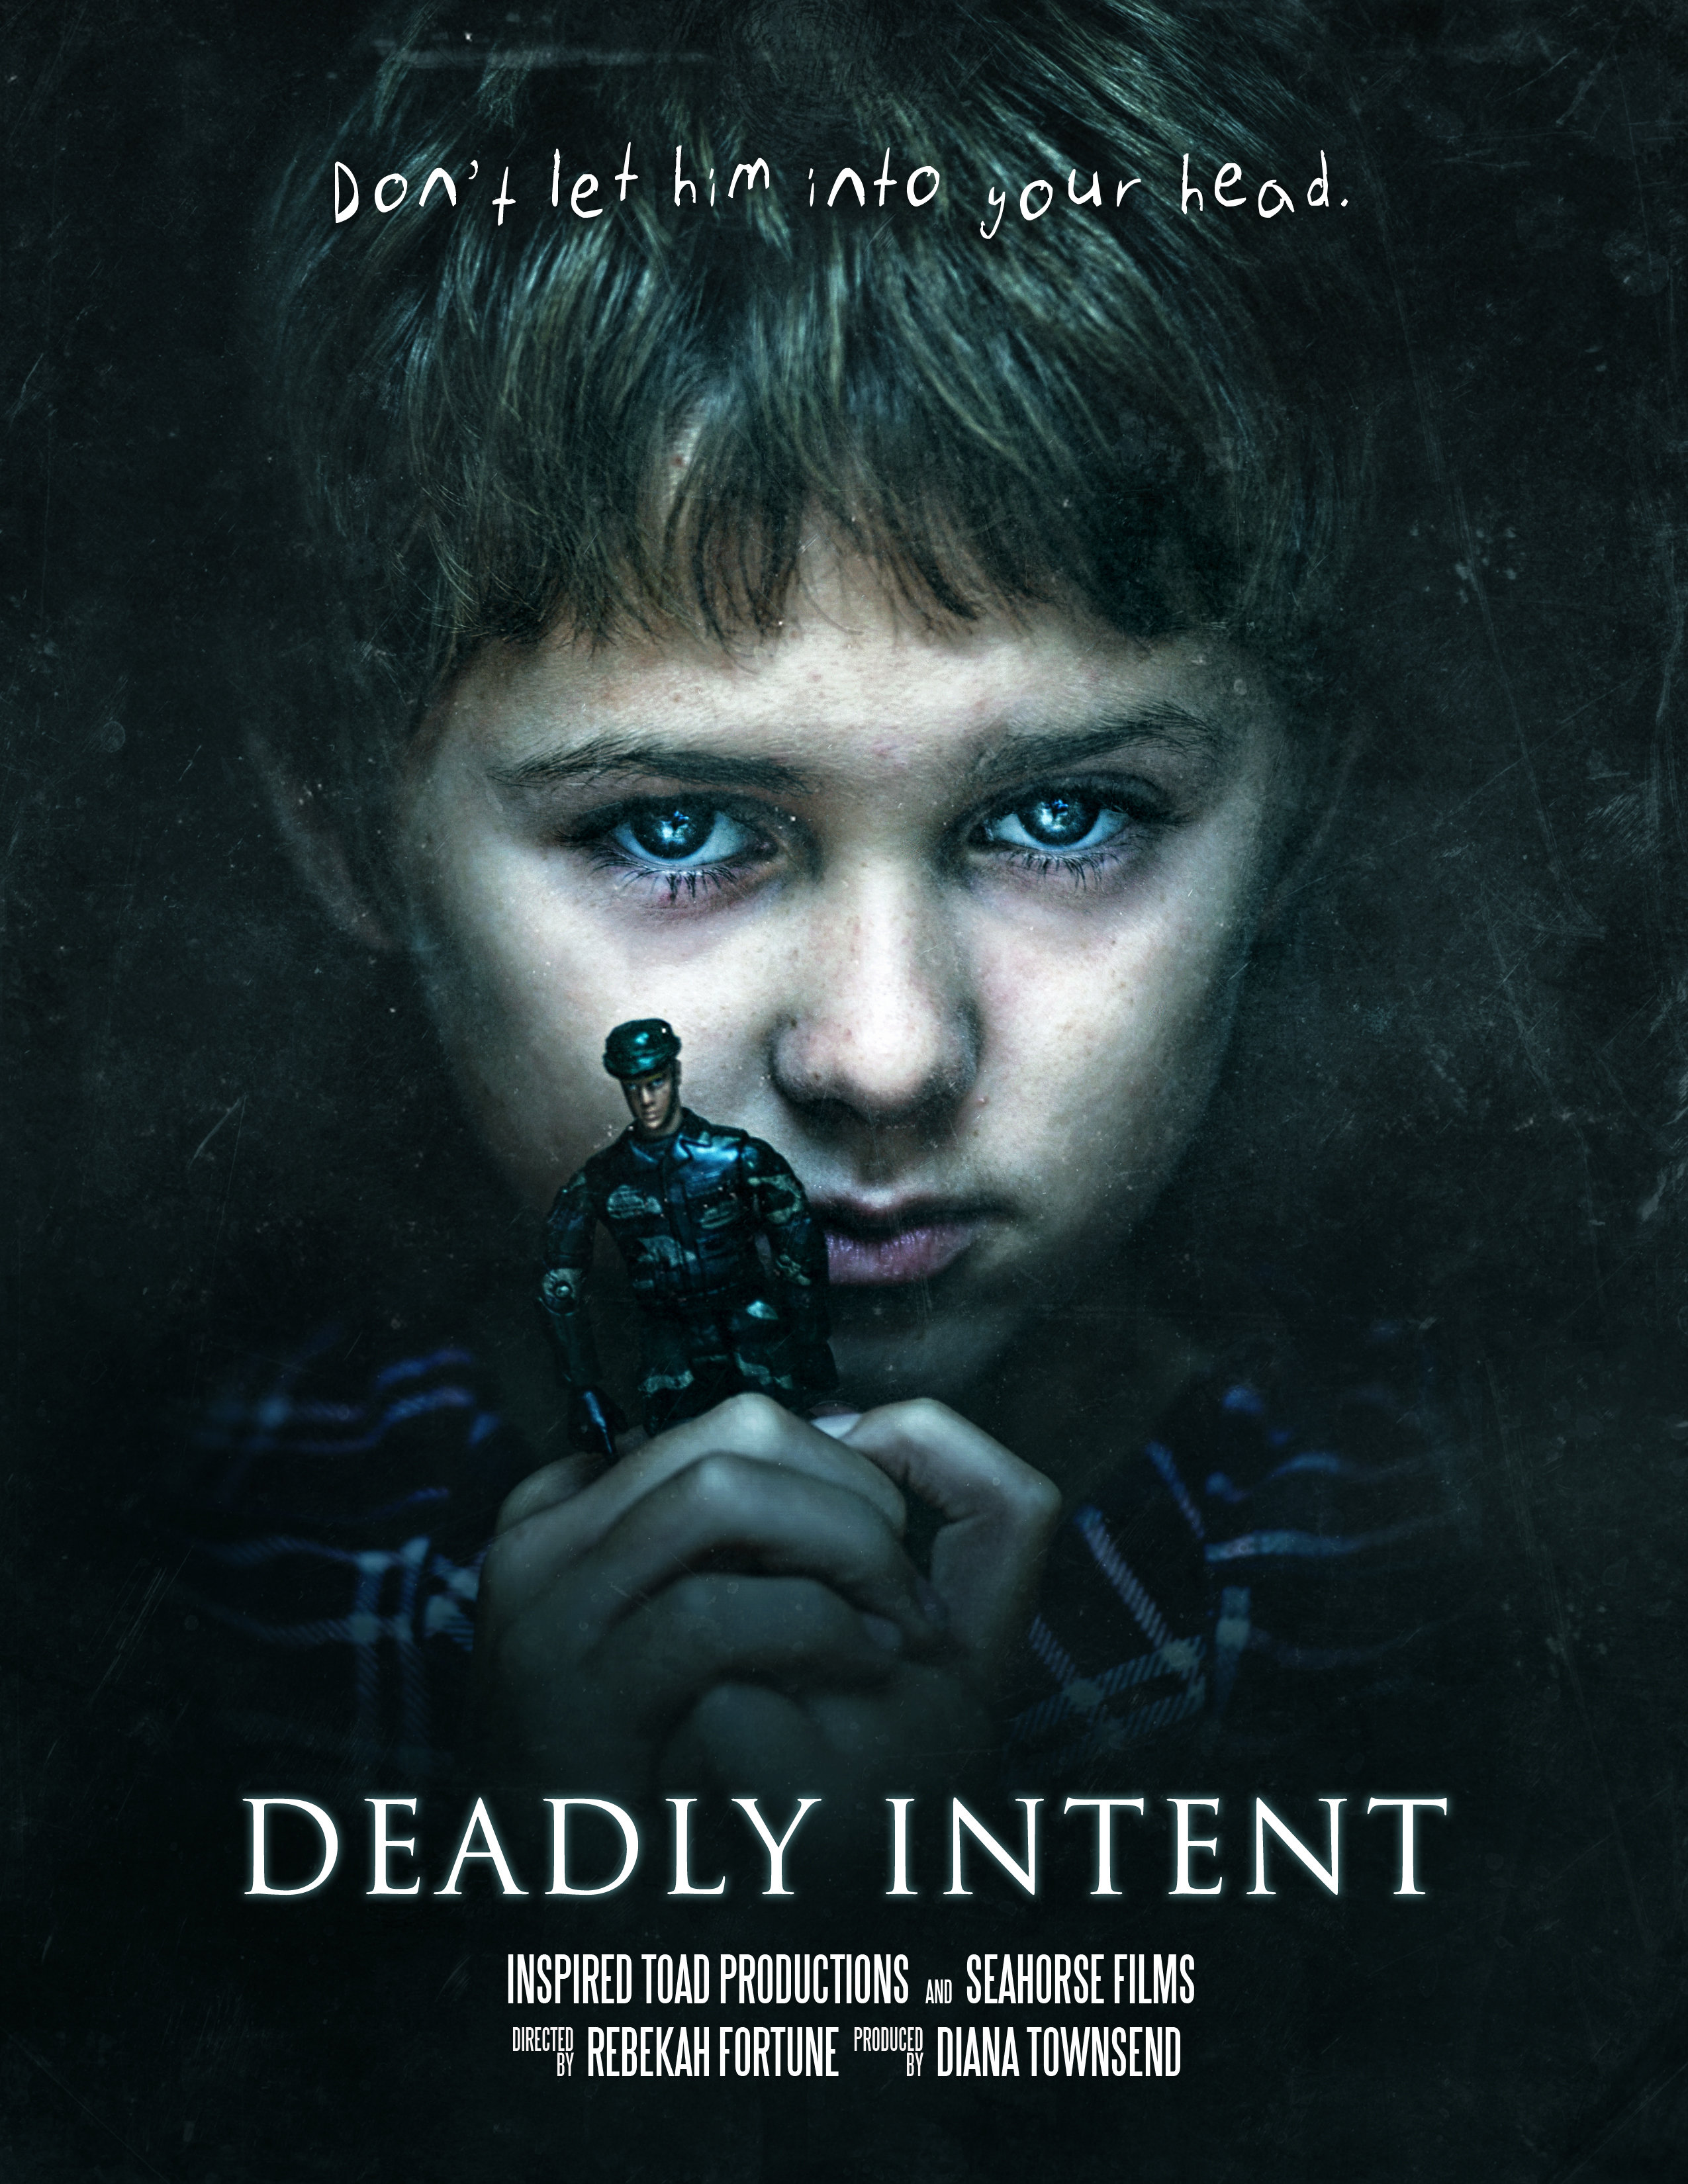 Nonton film Deadly Intent layarkaca21 indoxx1 ganool online streaming terbaru